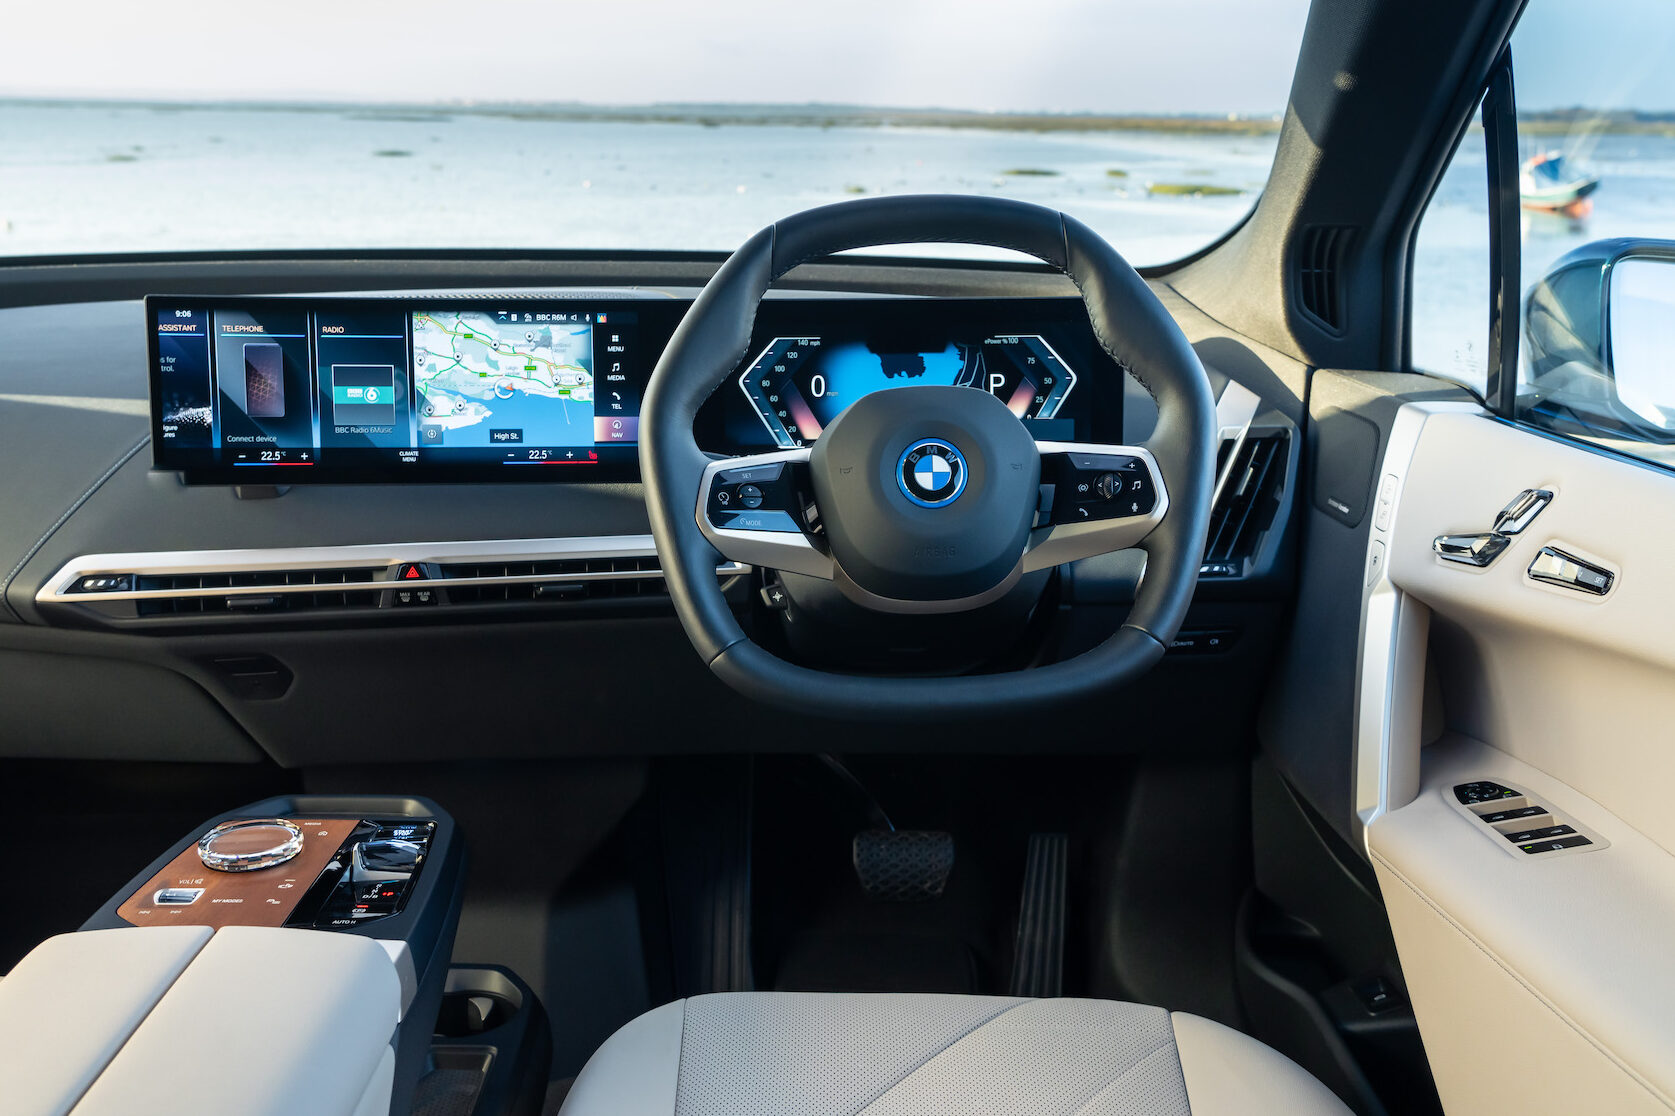 BMW iX electric SUV - EVs Unplugged